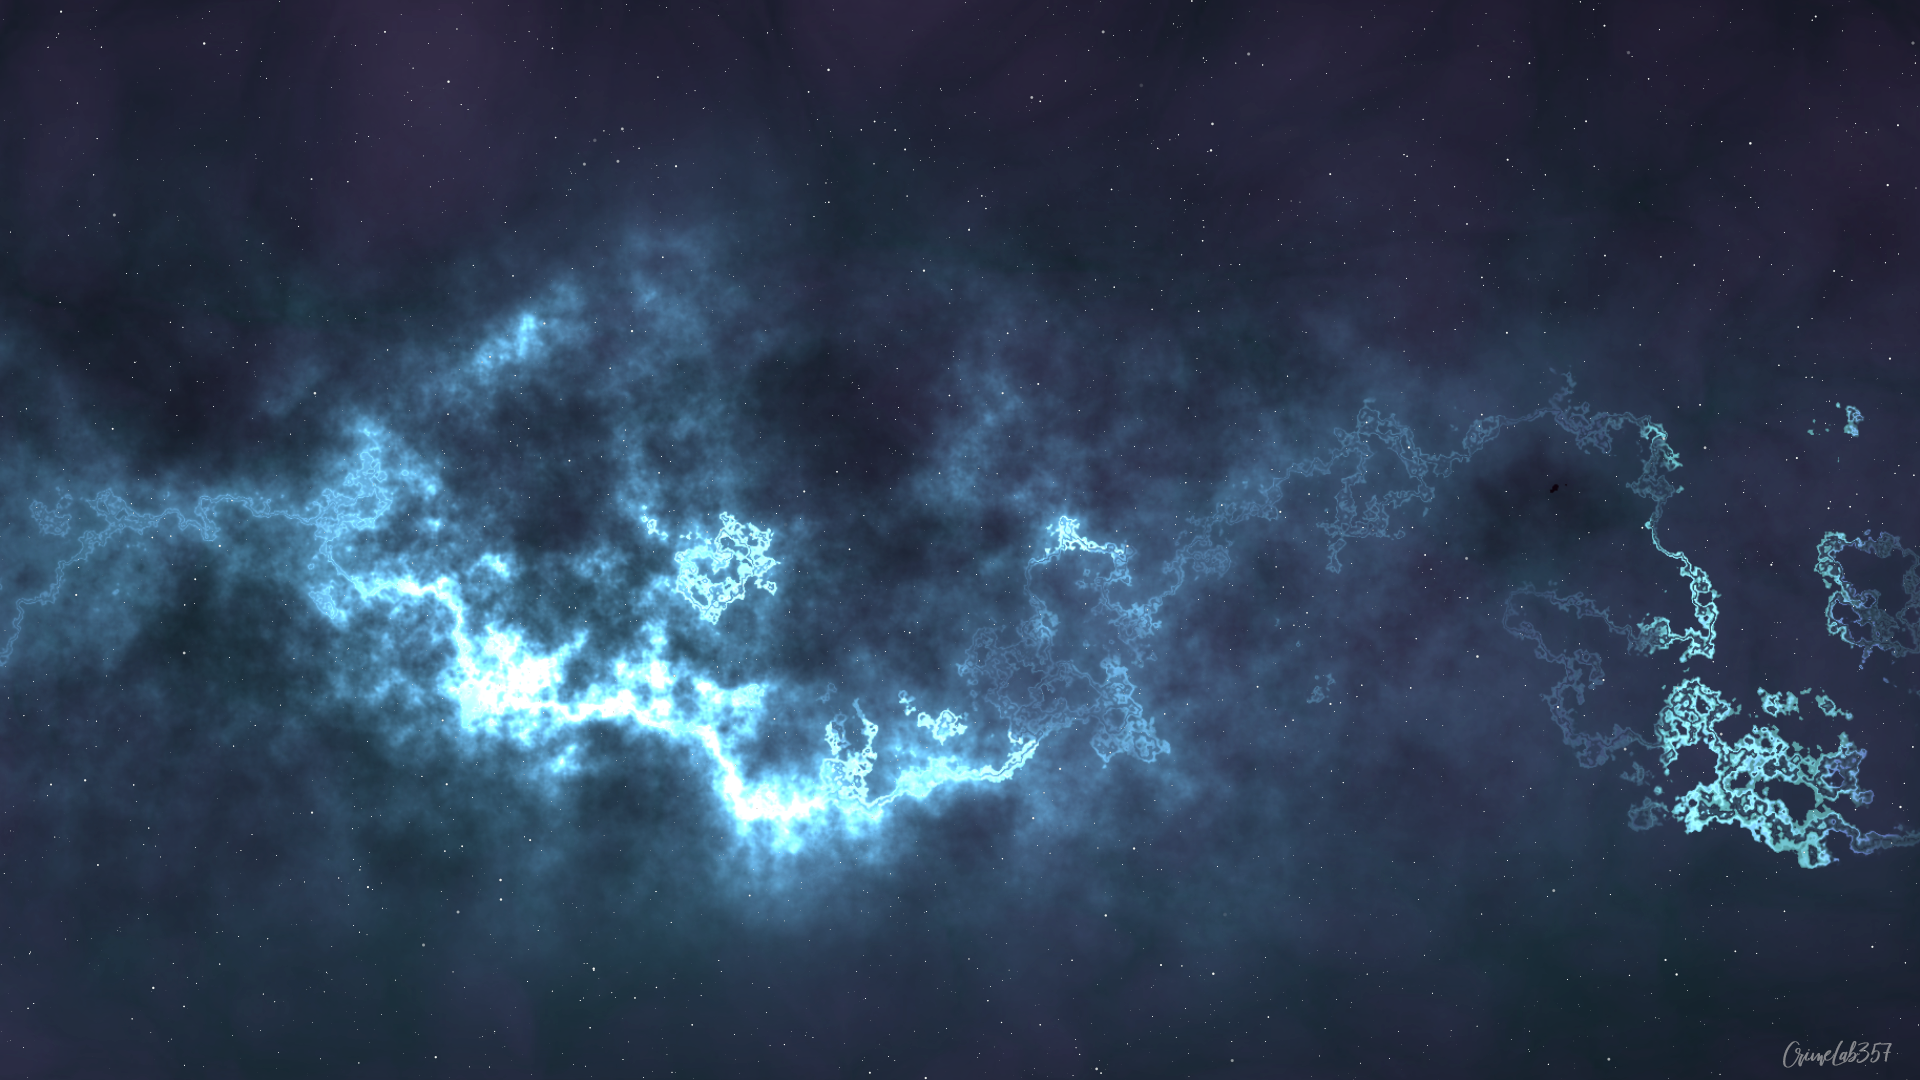 General 1920x1080 space nebula watermarked stars blue